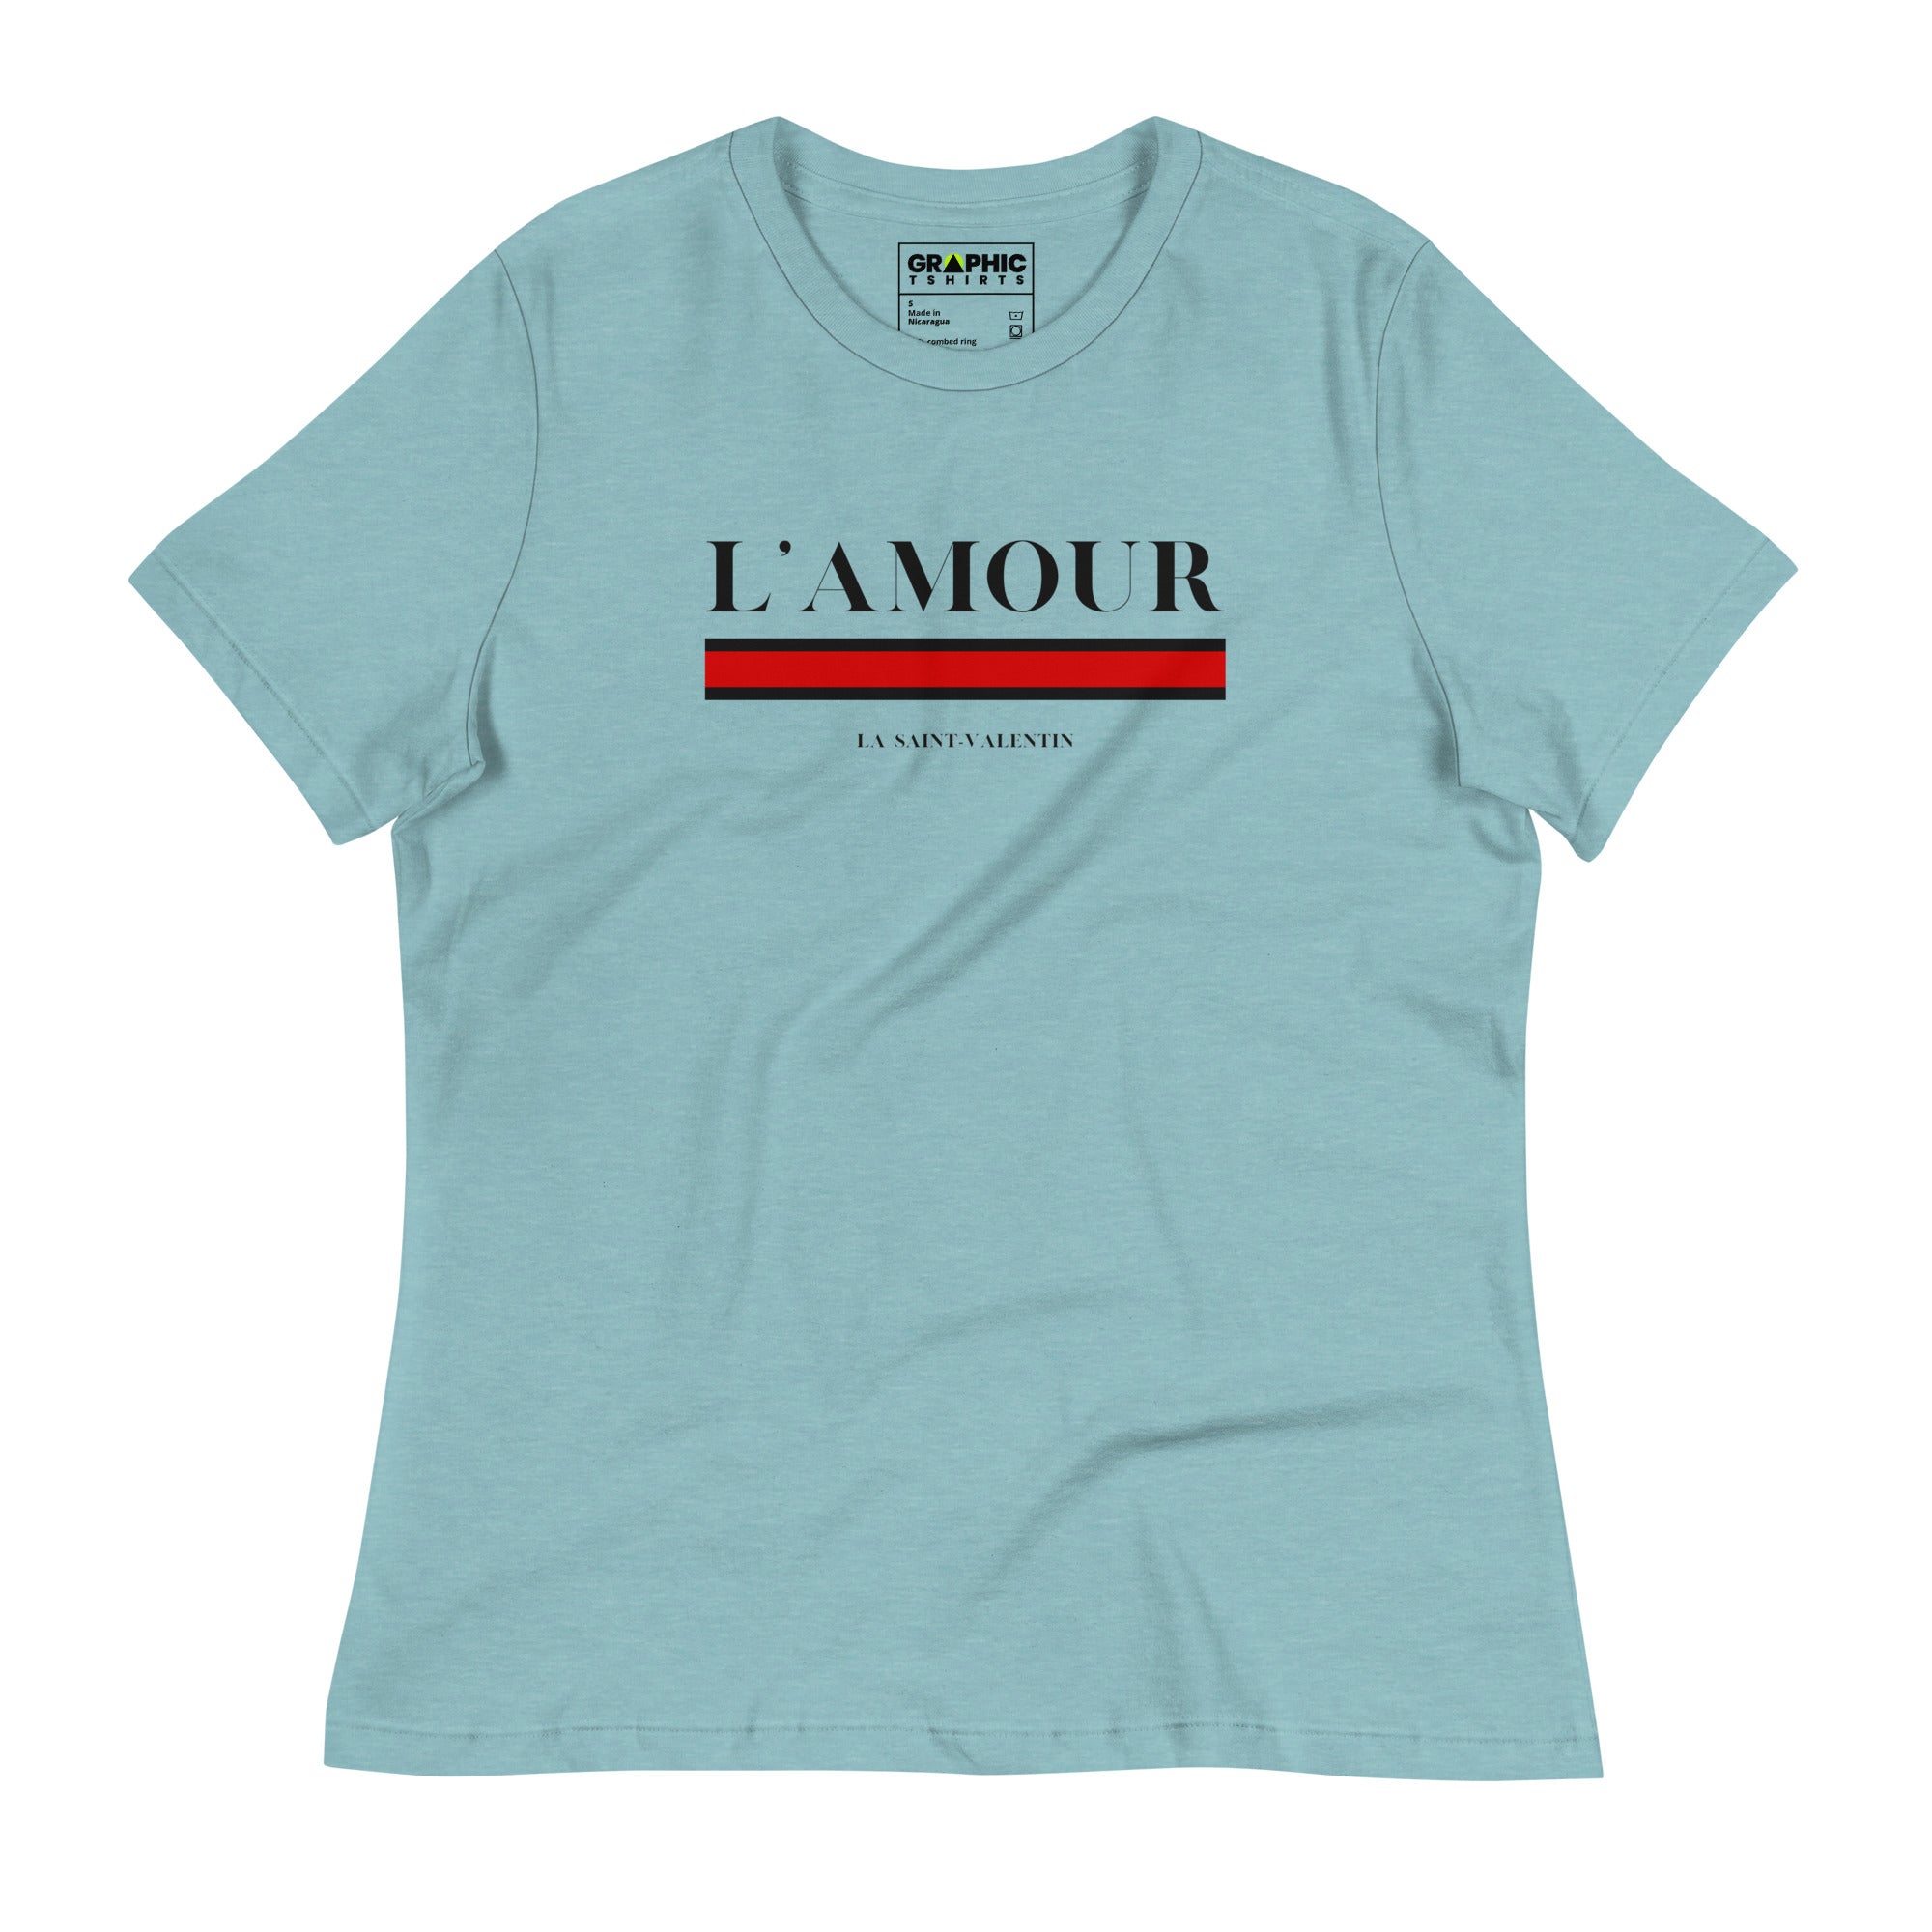 Women's Relaxed T-Shirt - L'Amour La Saint Valentin - GRAPHIC T-SHIRTS